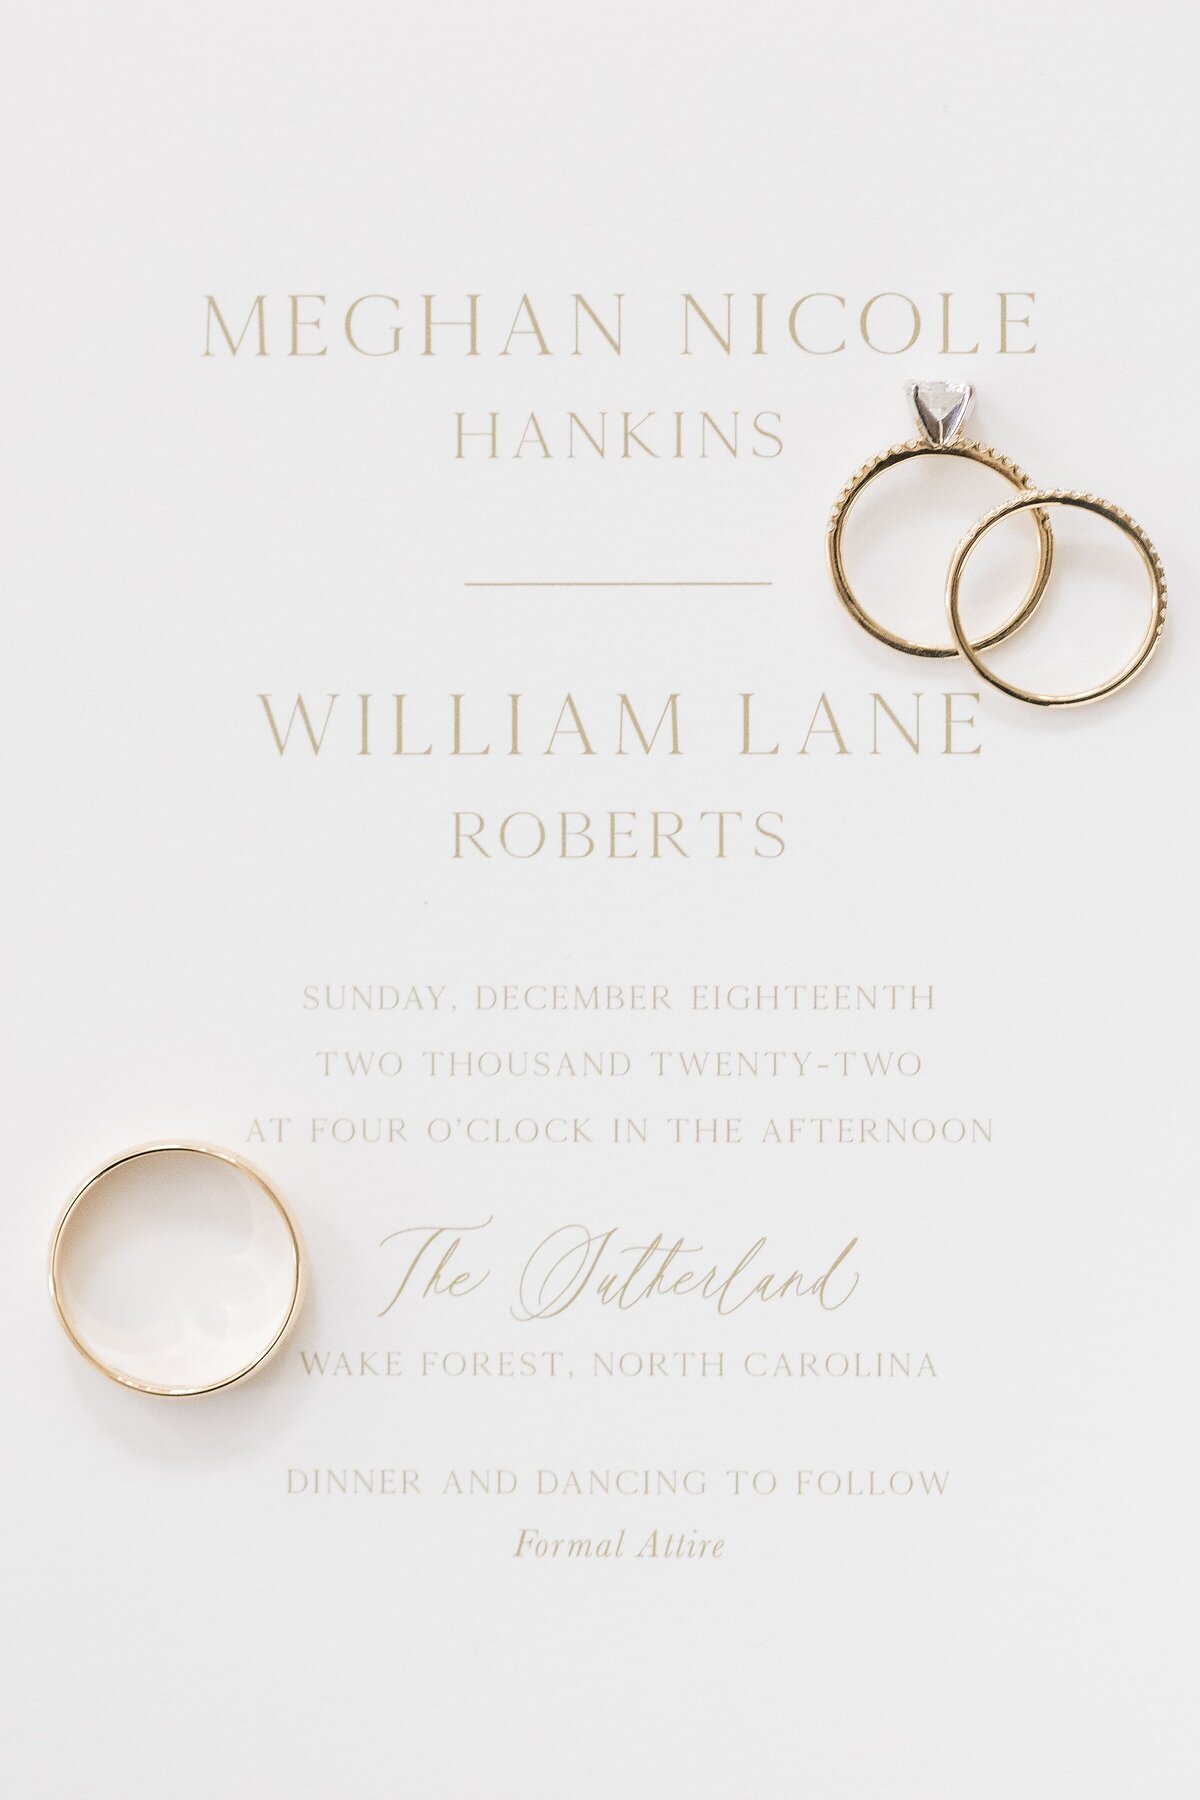 Raleigh-NC-Wedding-Photographer-The-Sutherland-Venue-Sarah-Hinckley-Photography-_0003